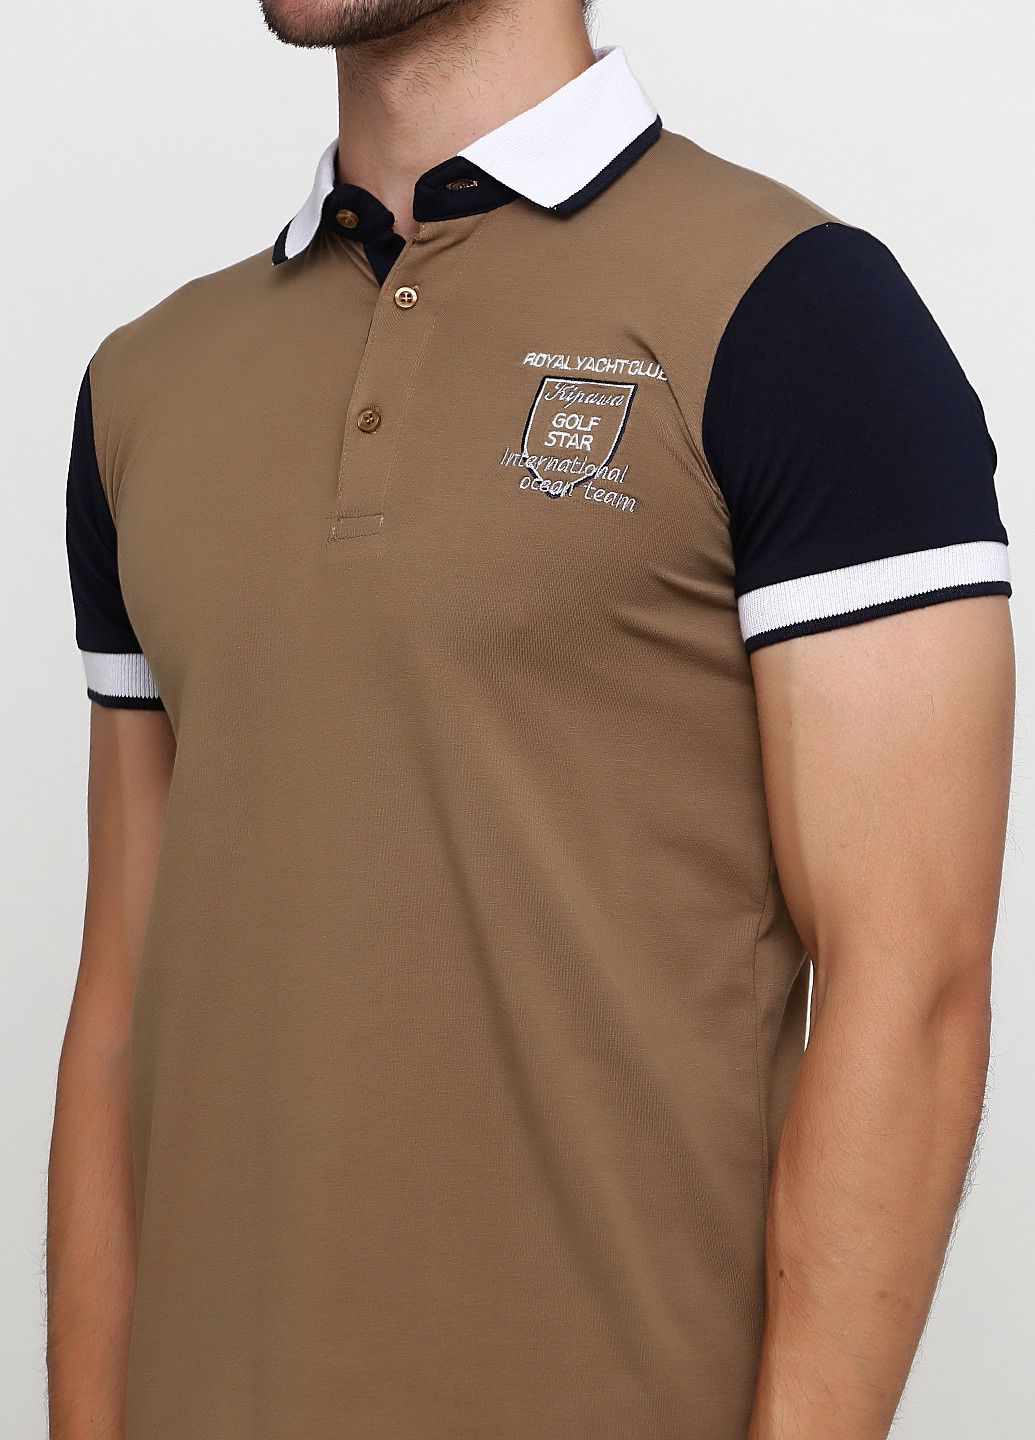 Коричневая футболка-поло для мужчин Golf однотонная